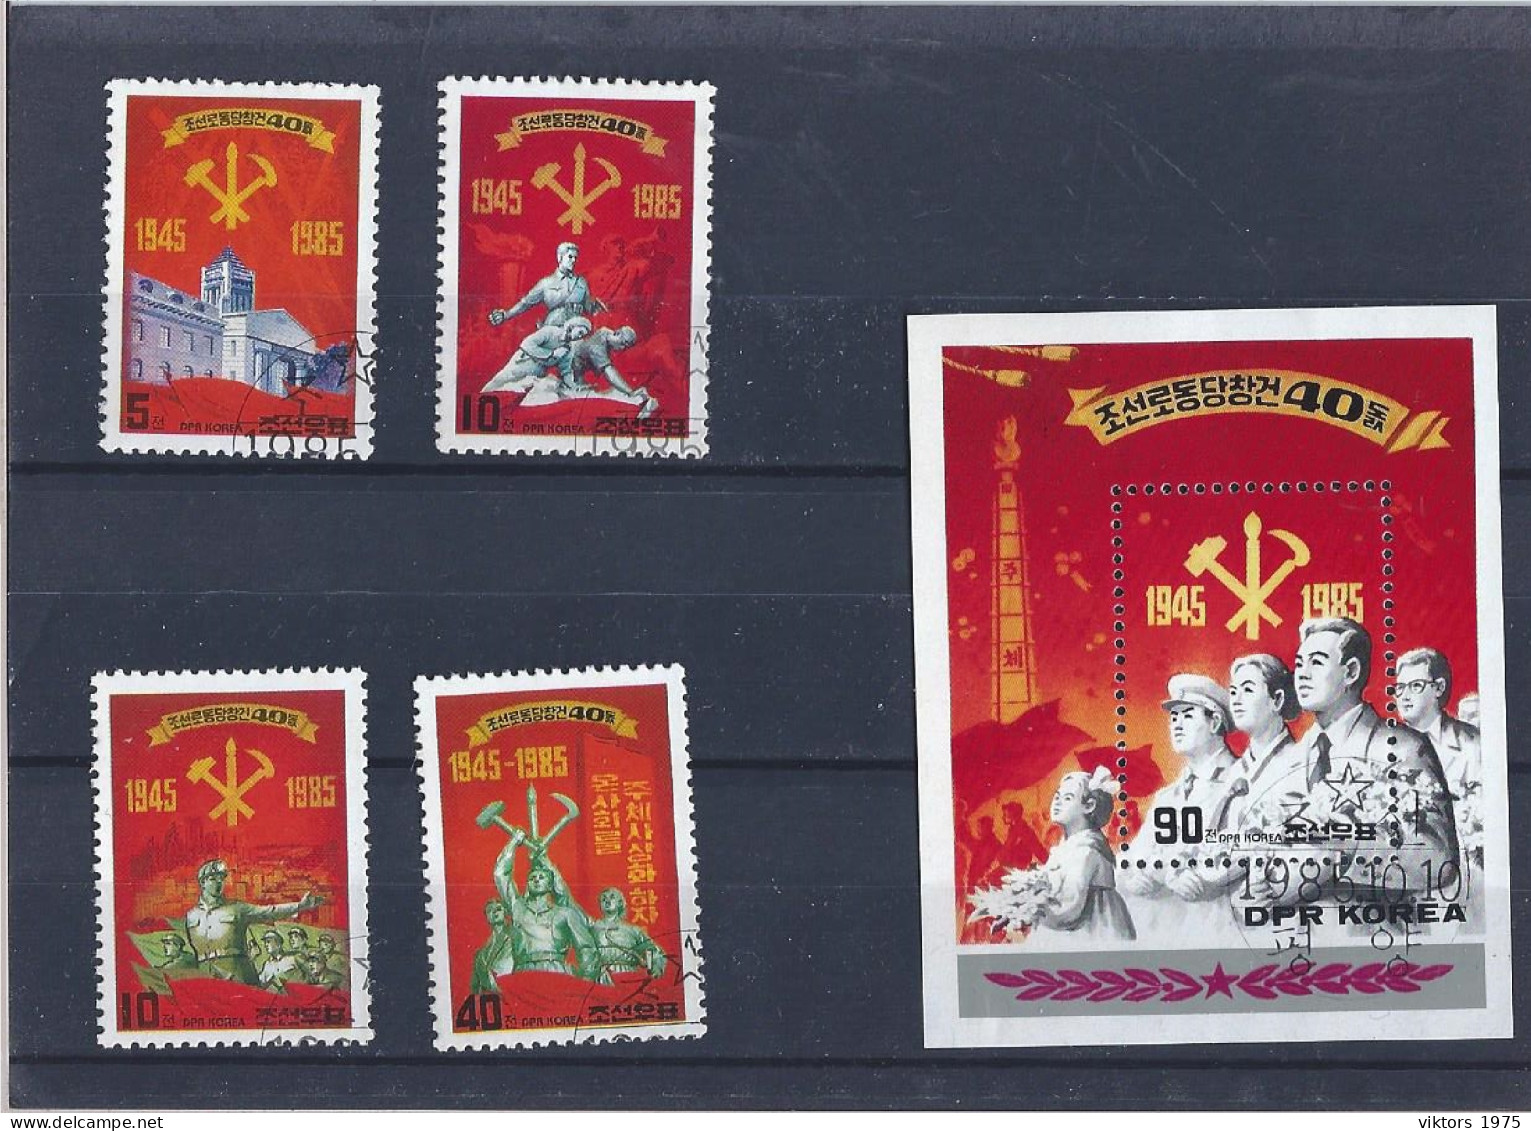 Used (CTO)  Stamps Nr.2687-2690 And Block Nr.205 In MICHEL Catalog - Corea Del Norte